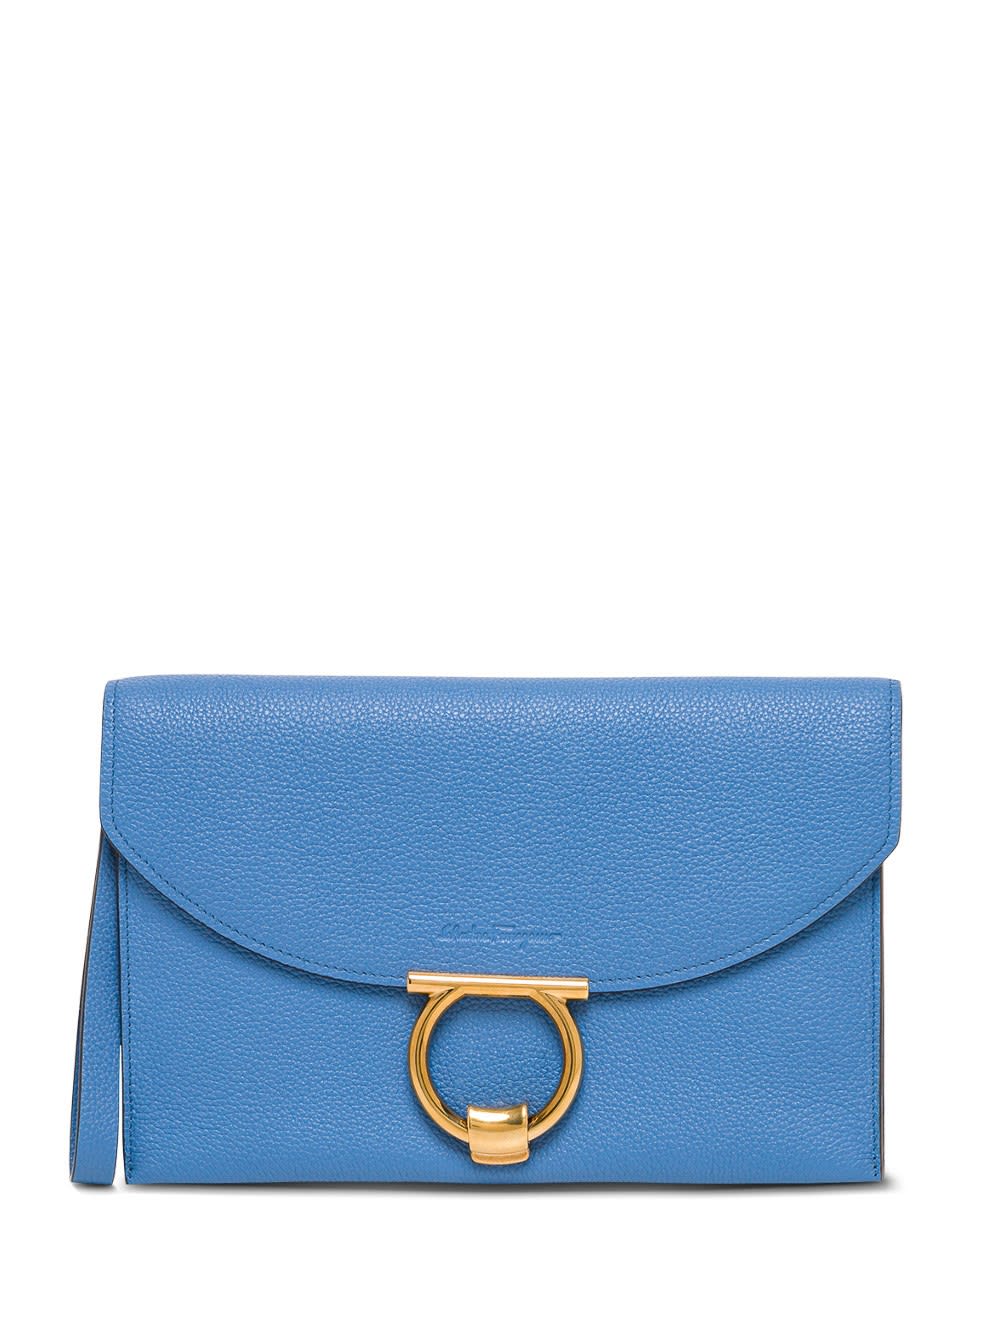 Salvatore Ferragamo Margot Handbag In Light Blue Leather